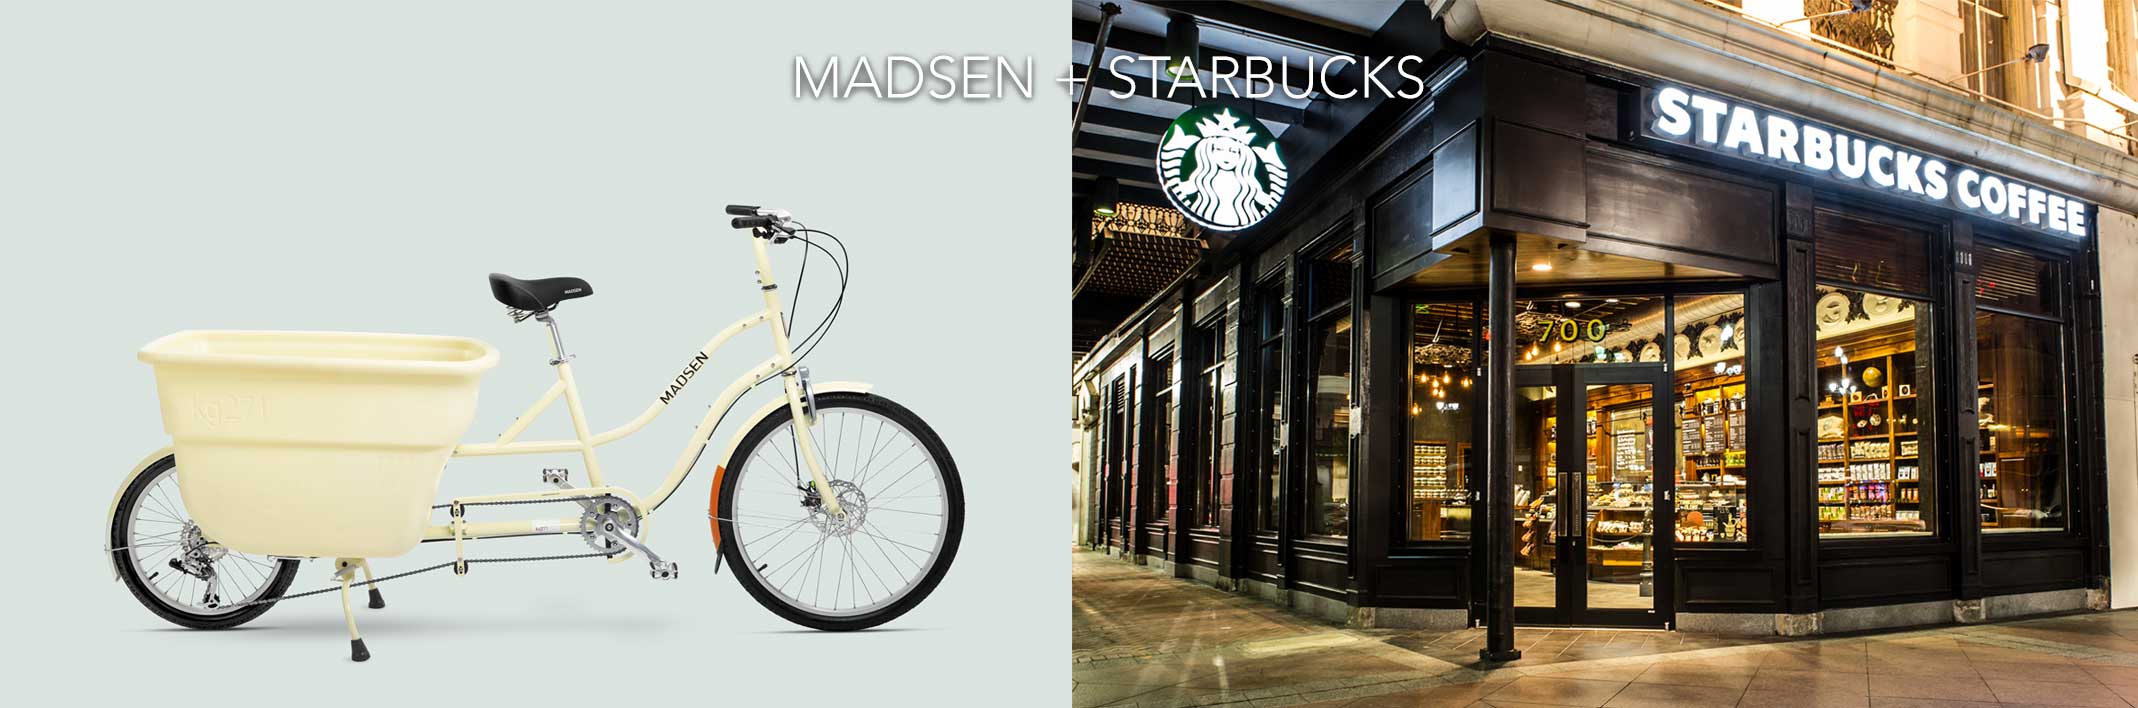 Madsen Cycles and Starbucks